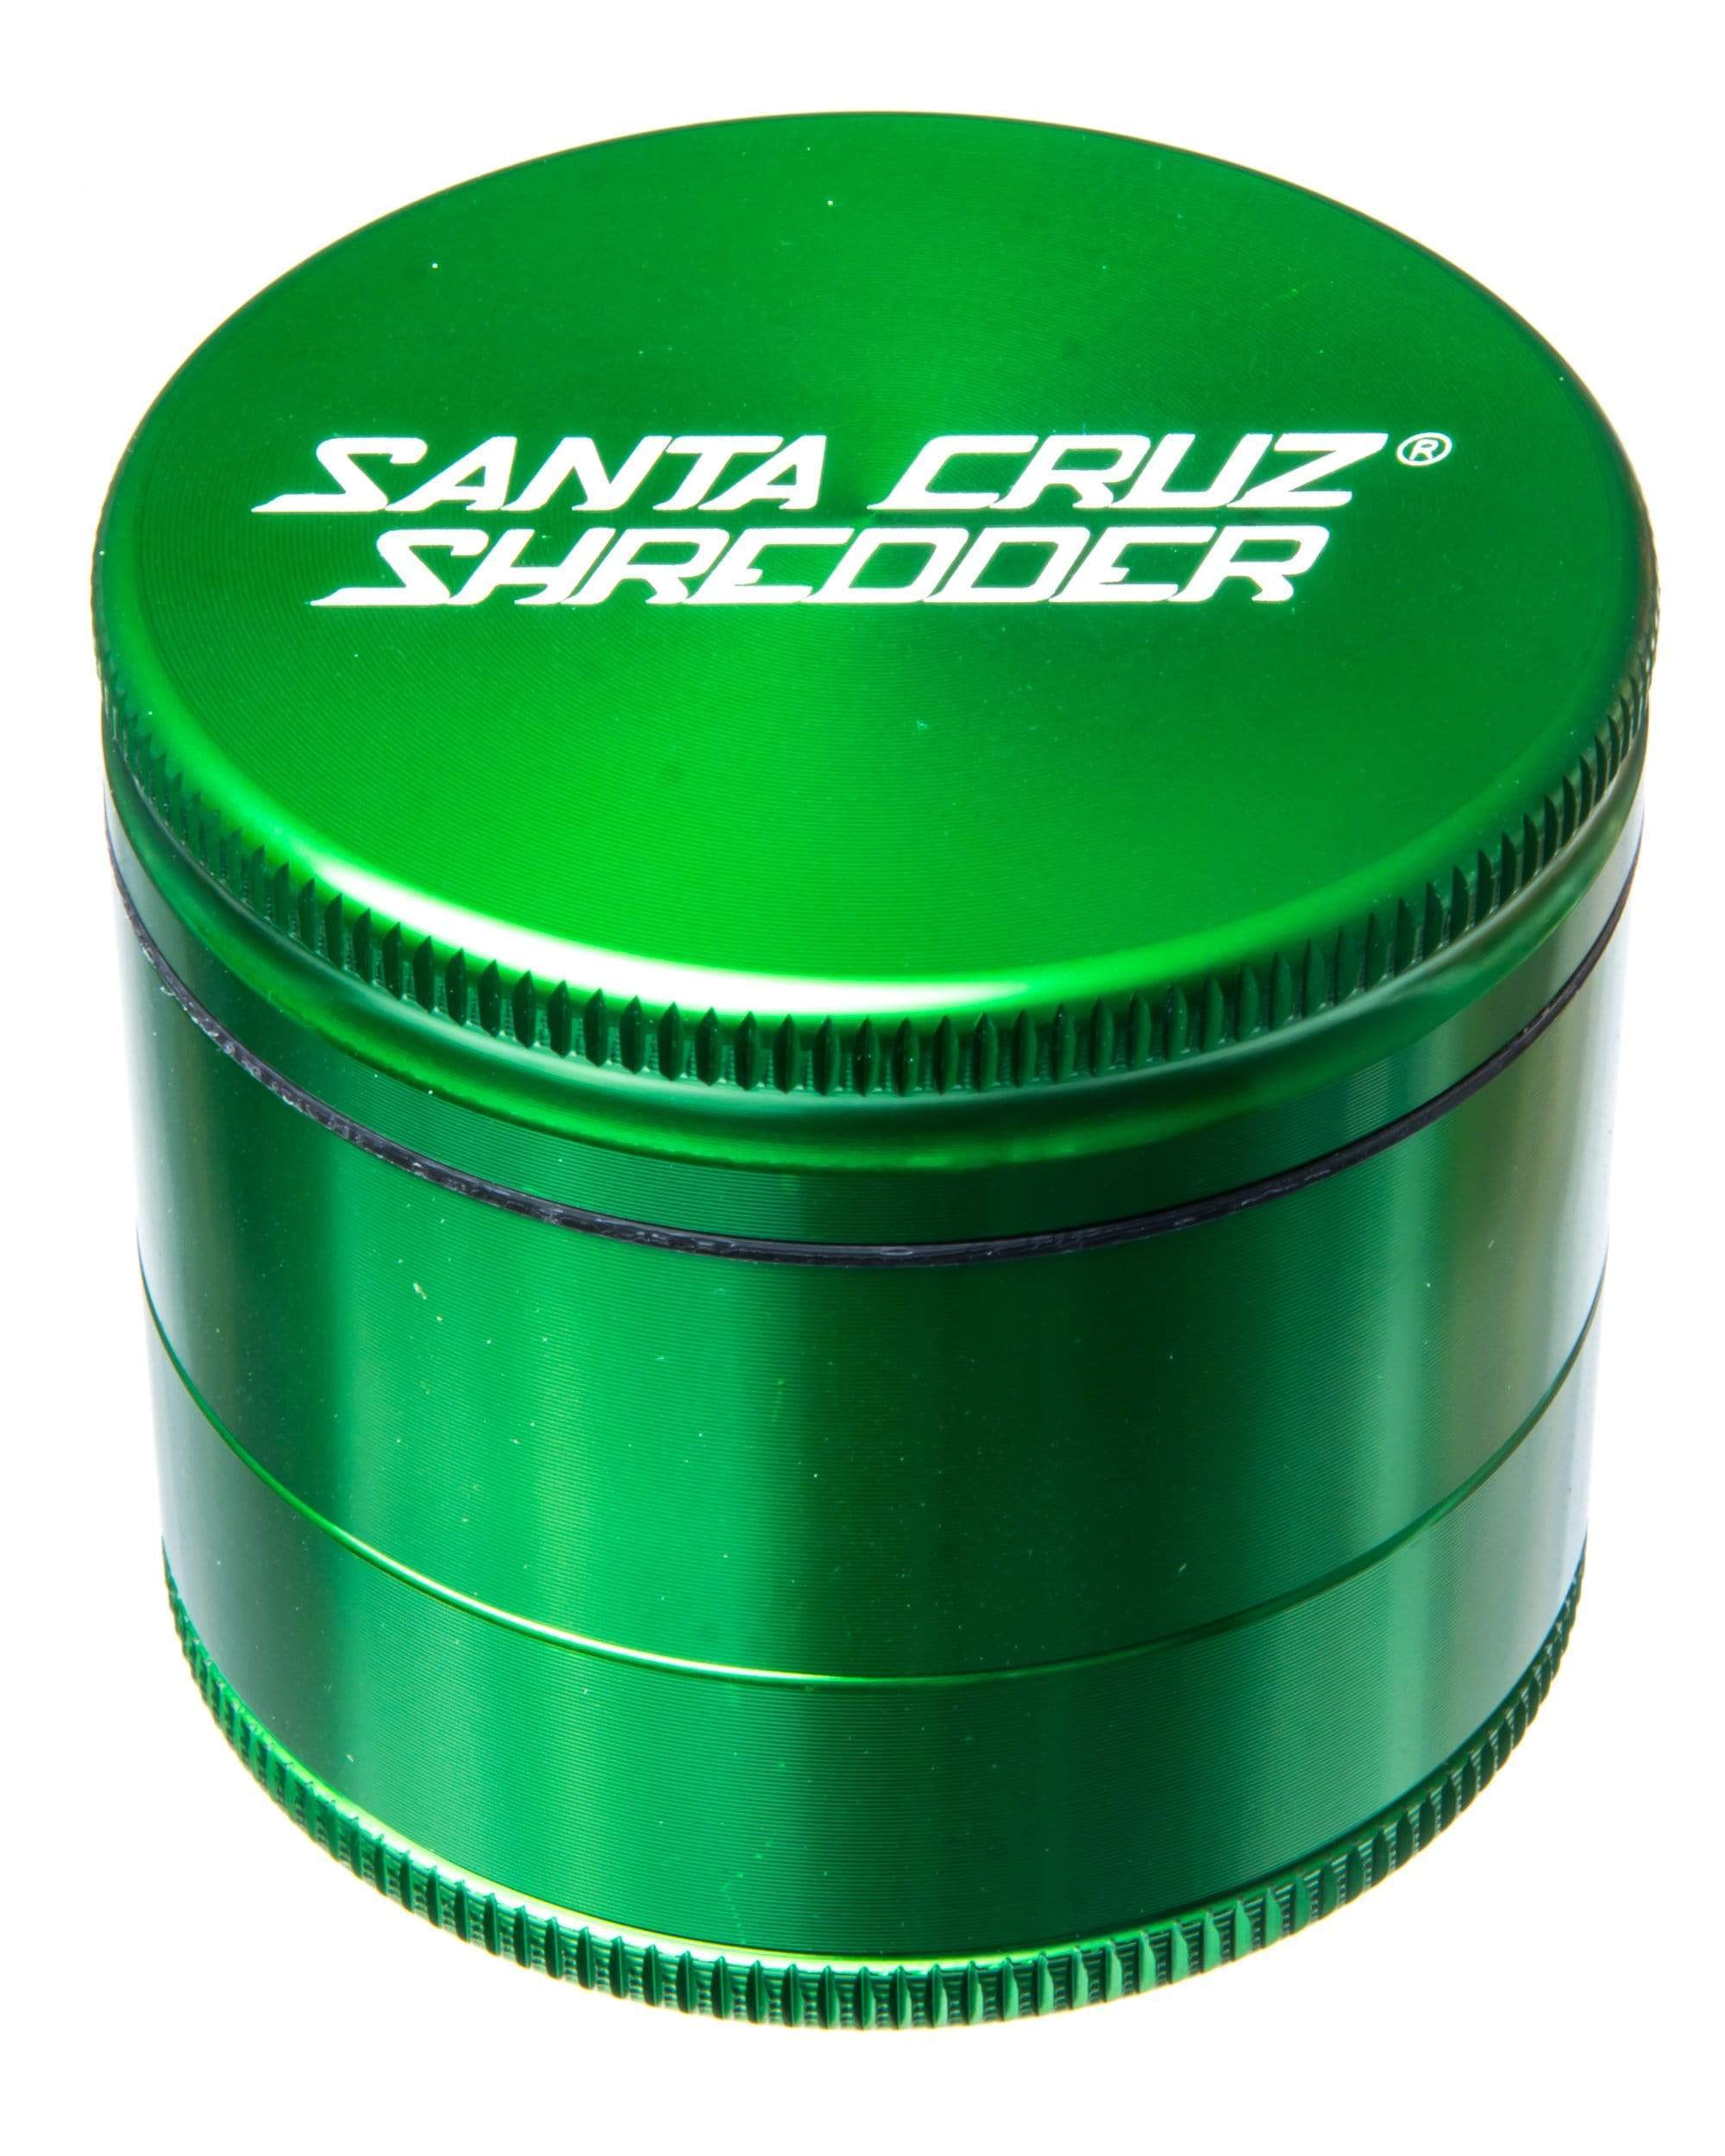 Santa Cruz Shredder Green grinder 587700000000